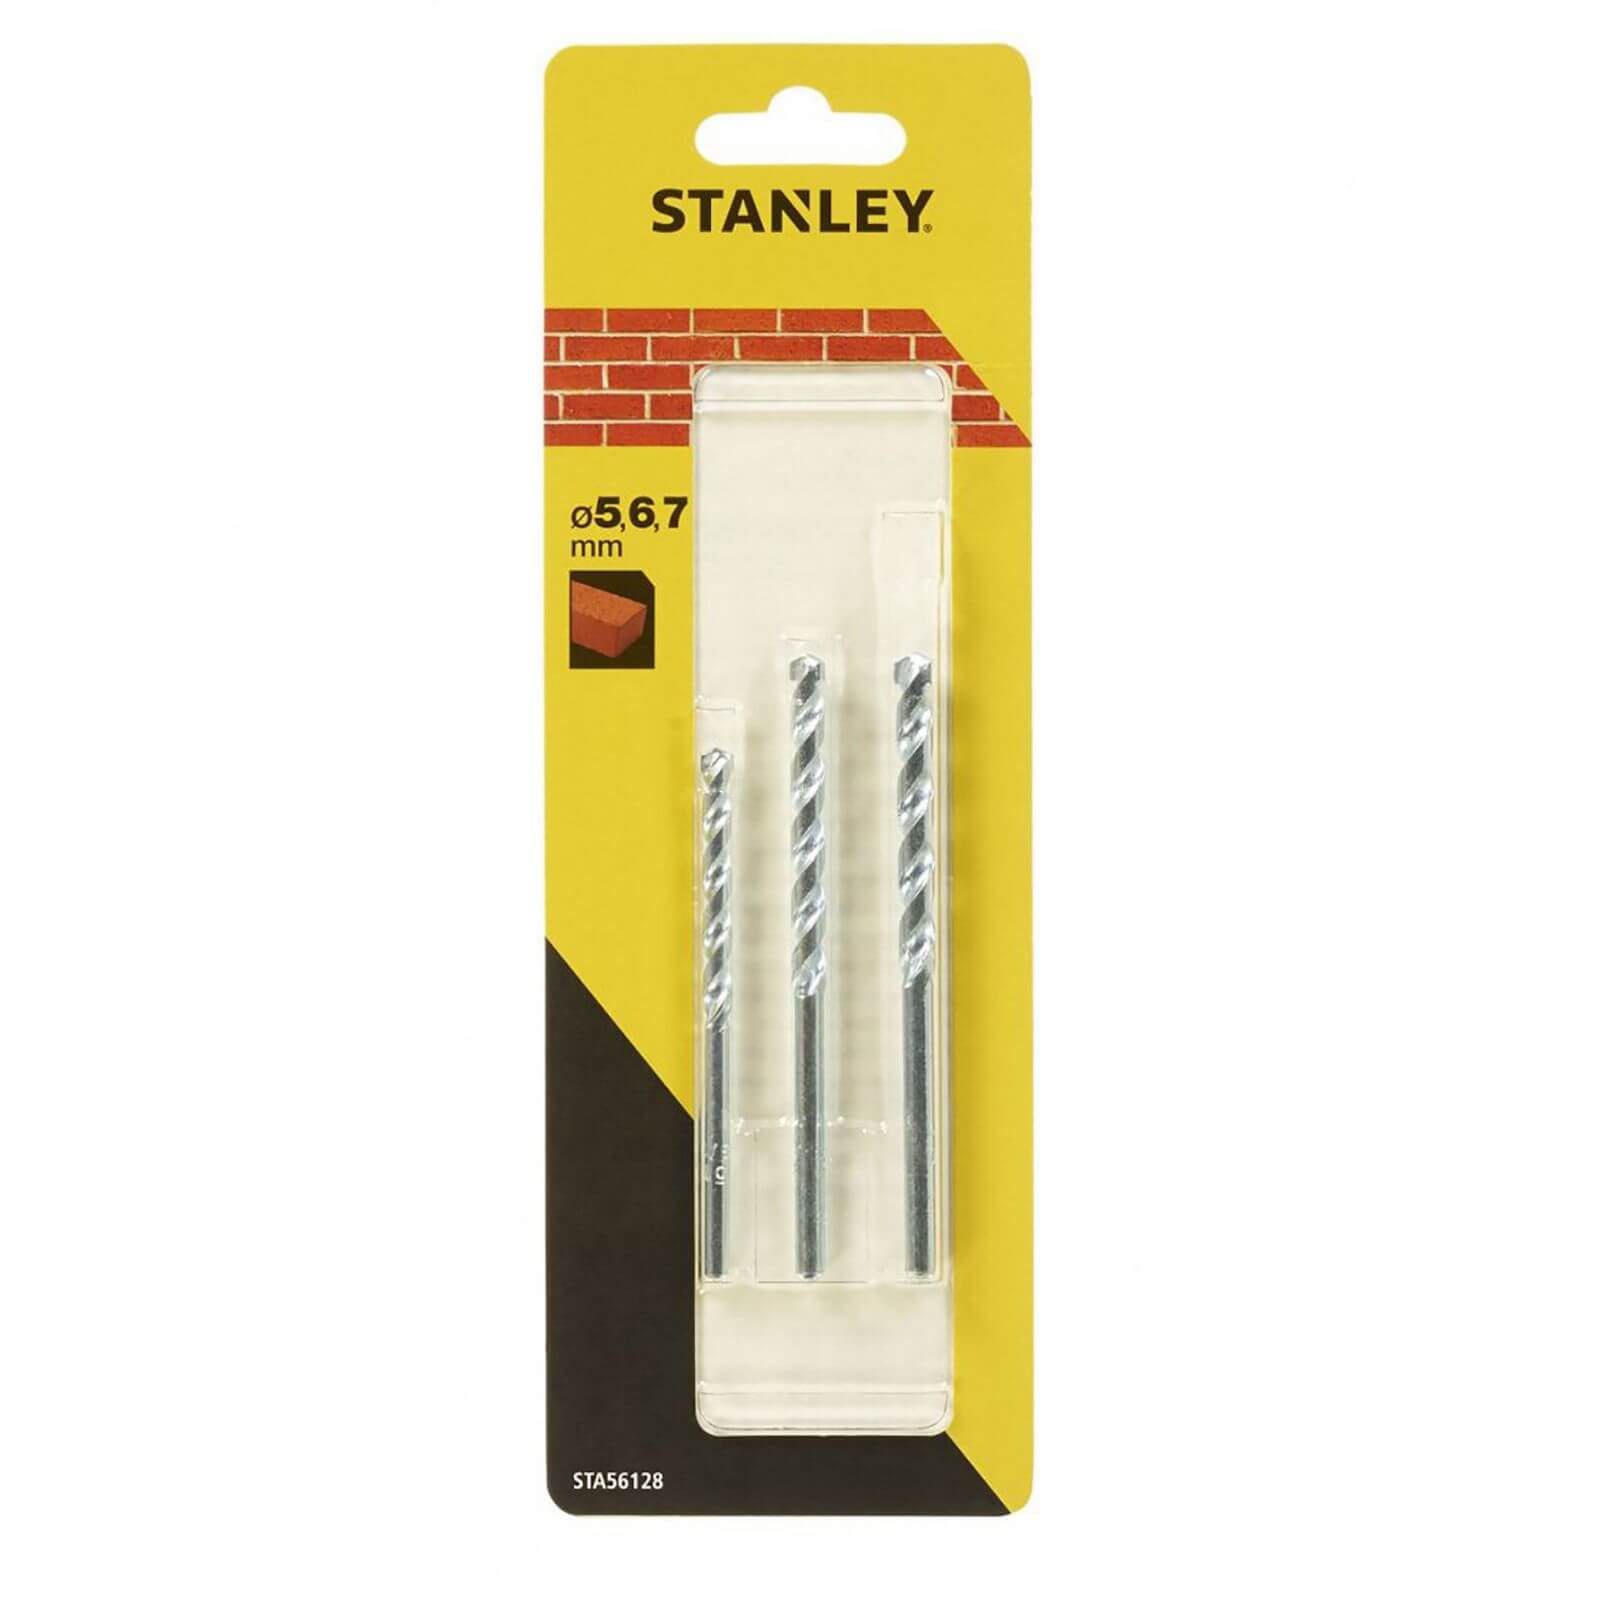 Stanley 3Pc Masonry Drill Bit Set - STA56128-XJ